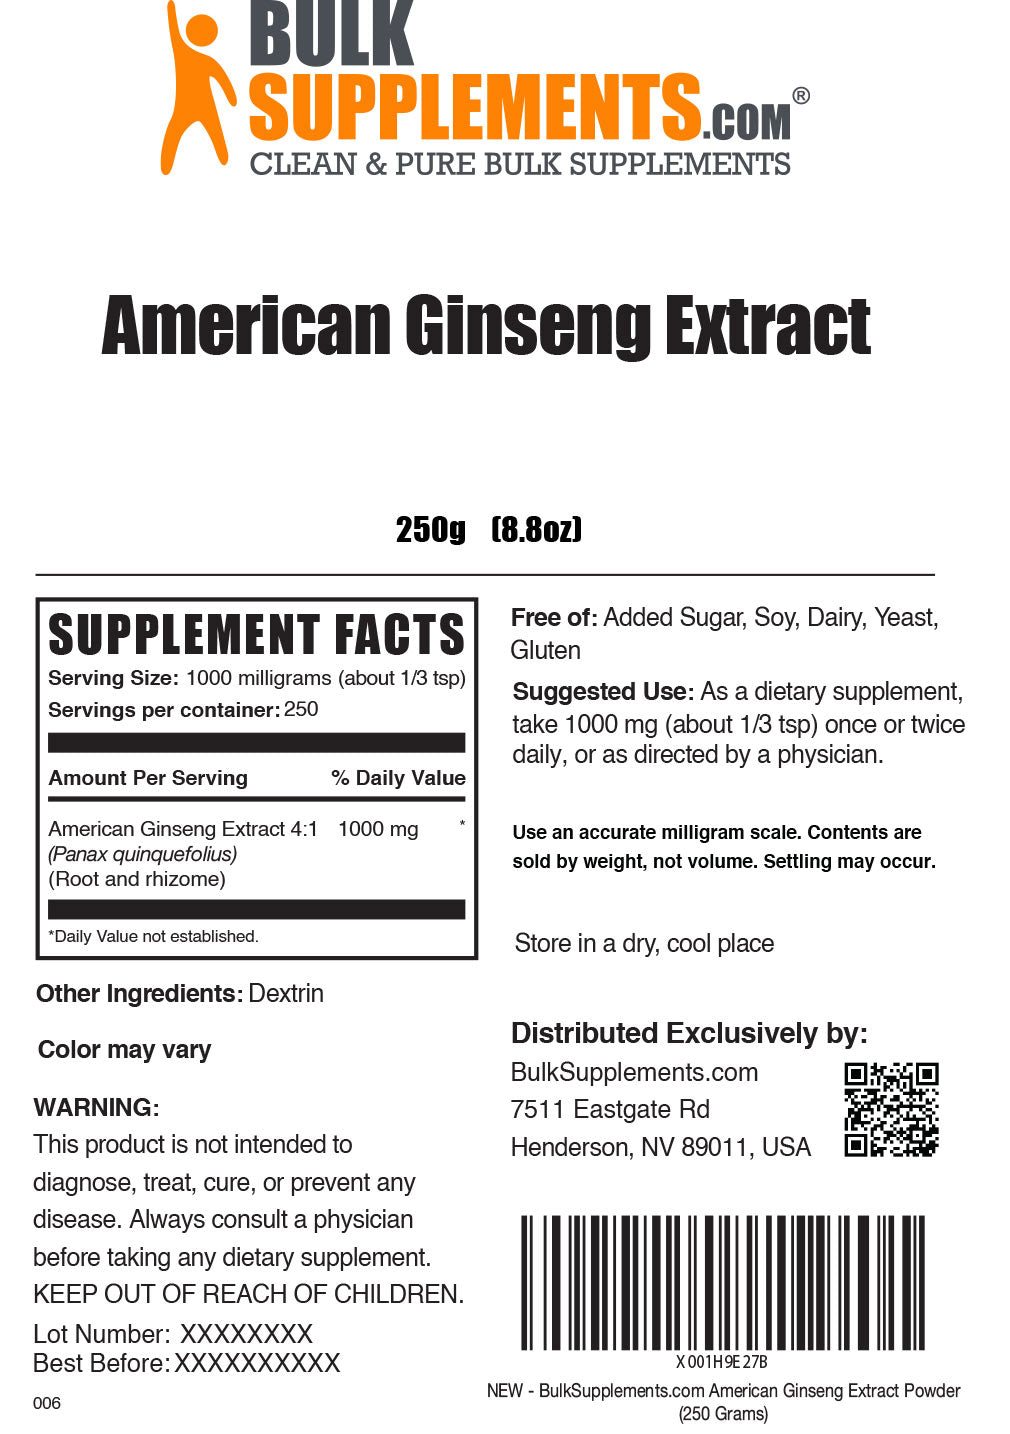 American Ginseng Extract Powder